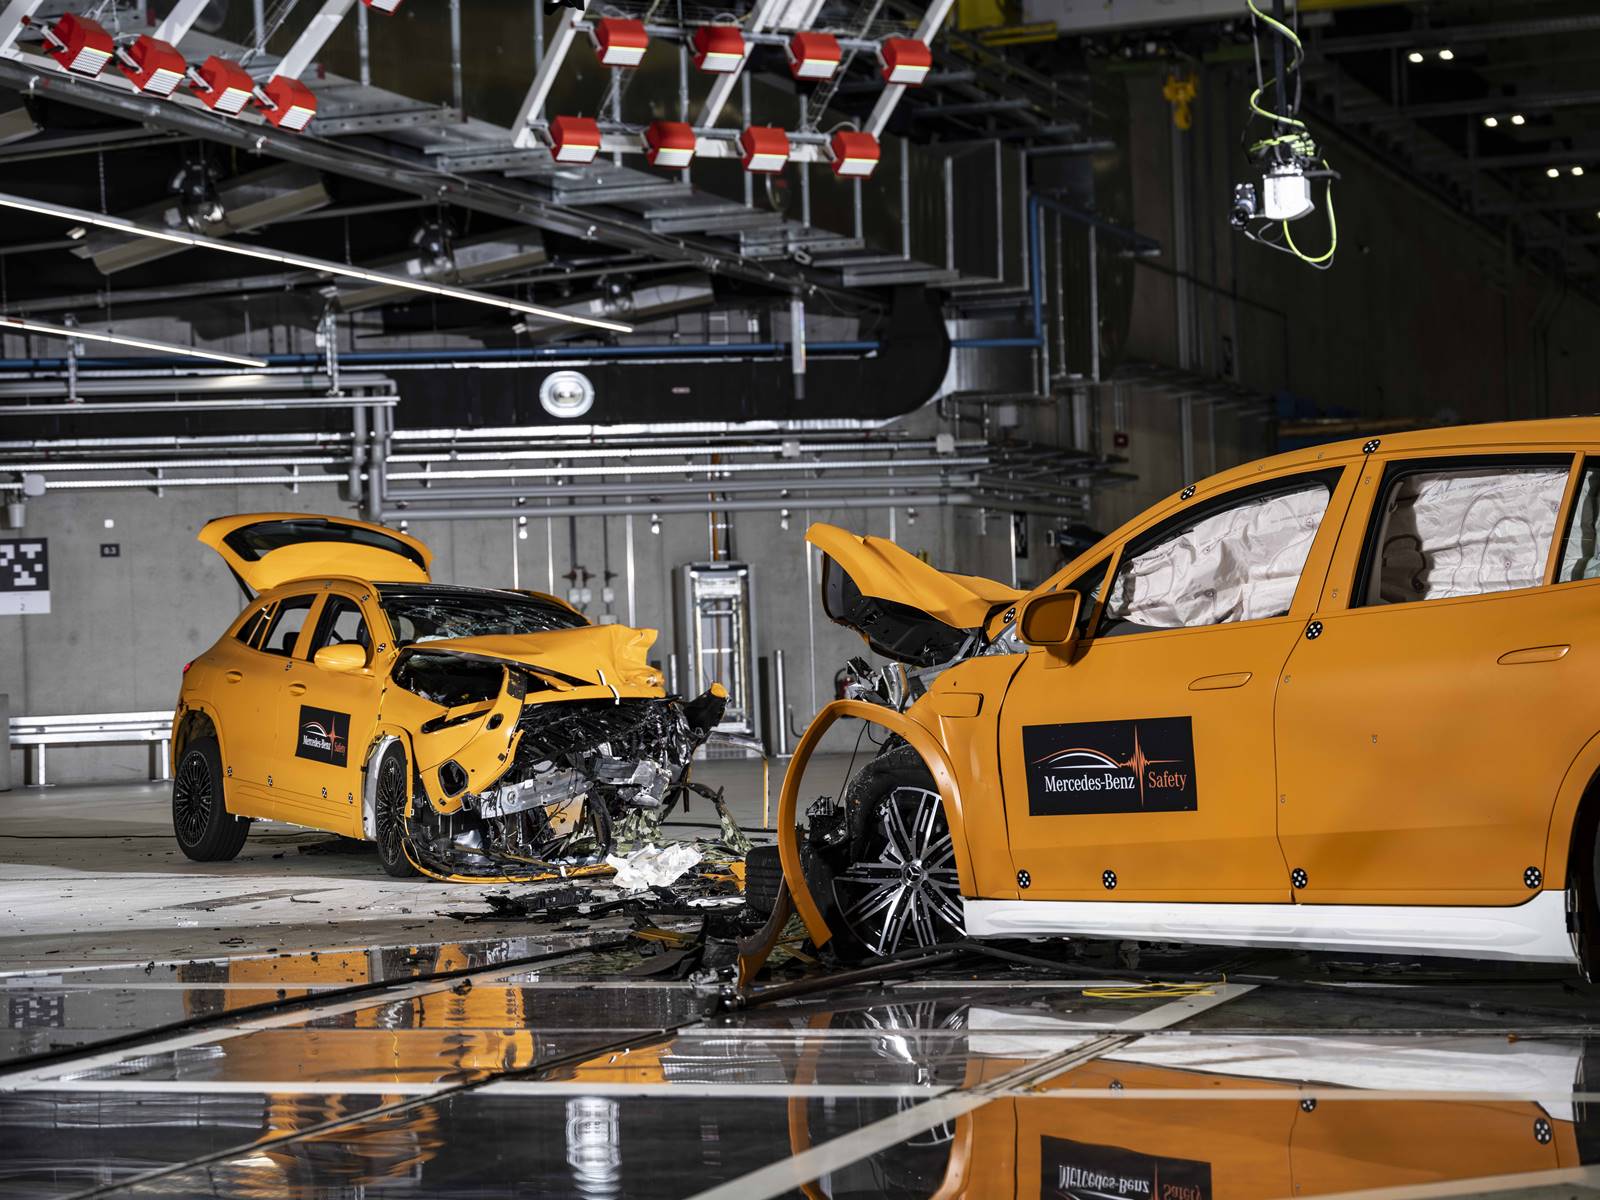 Mercedes-Benz EV crash test 